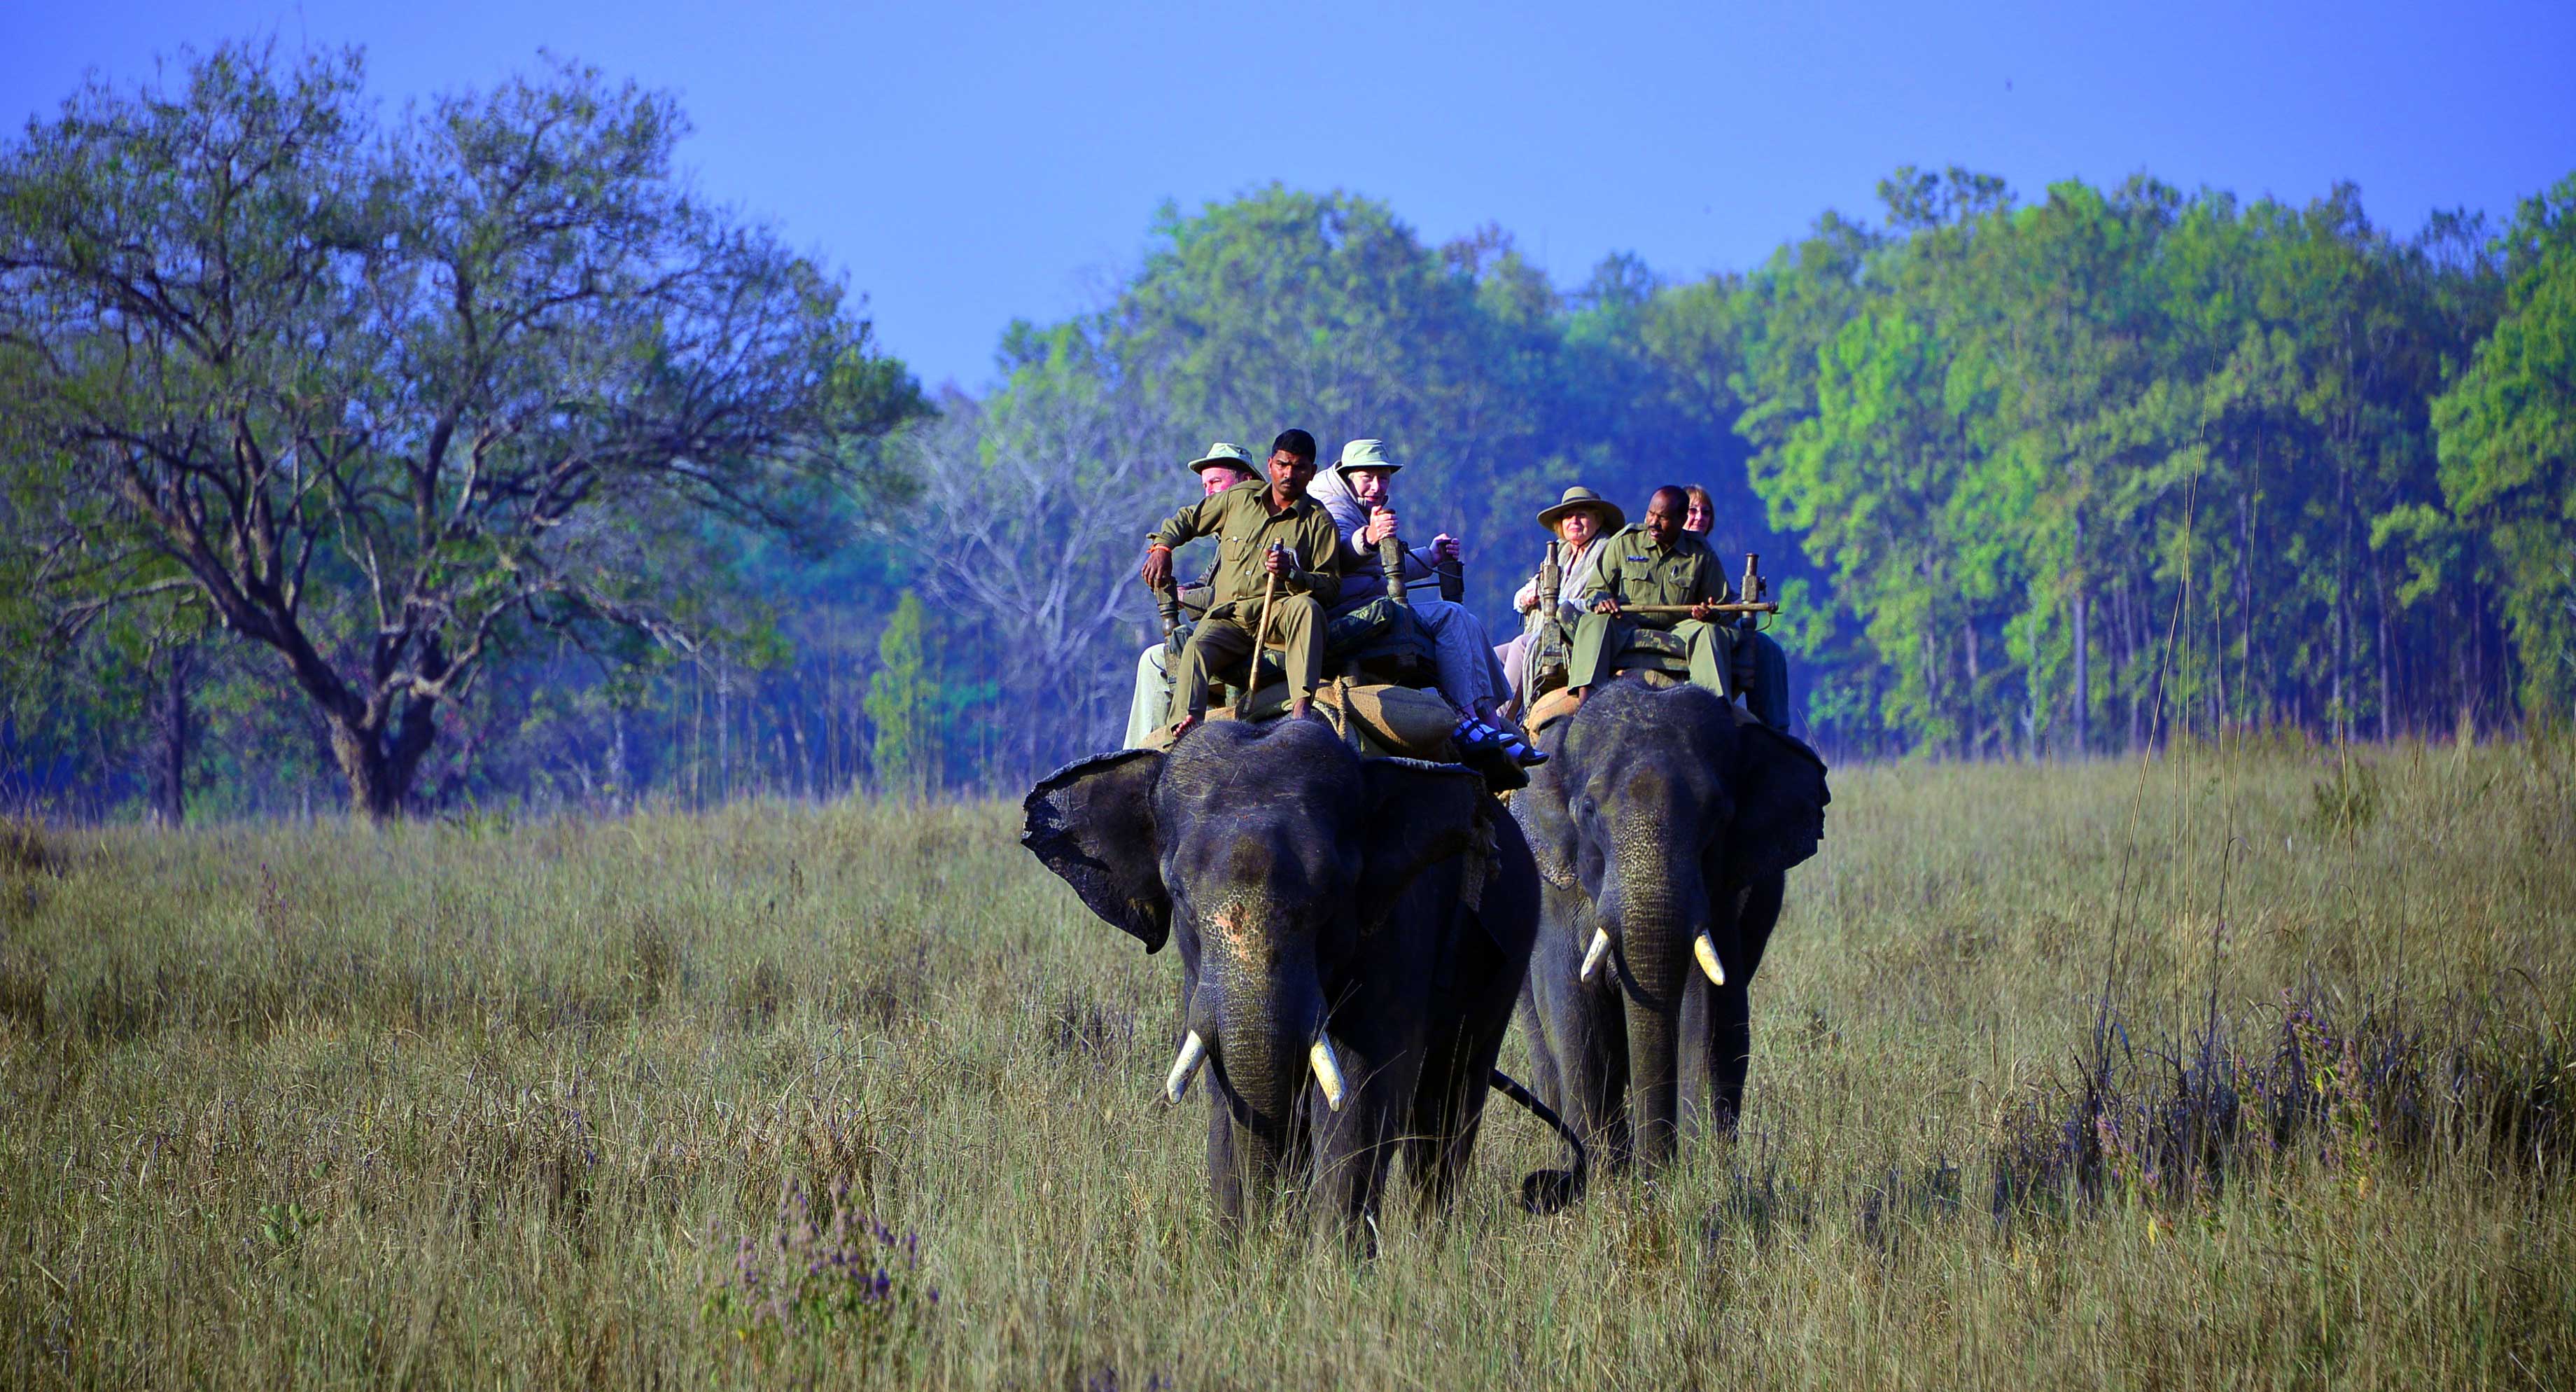 about elephant safari in india